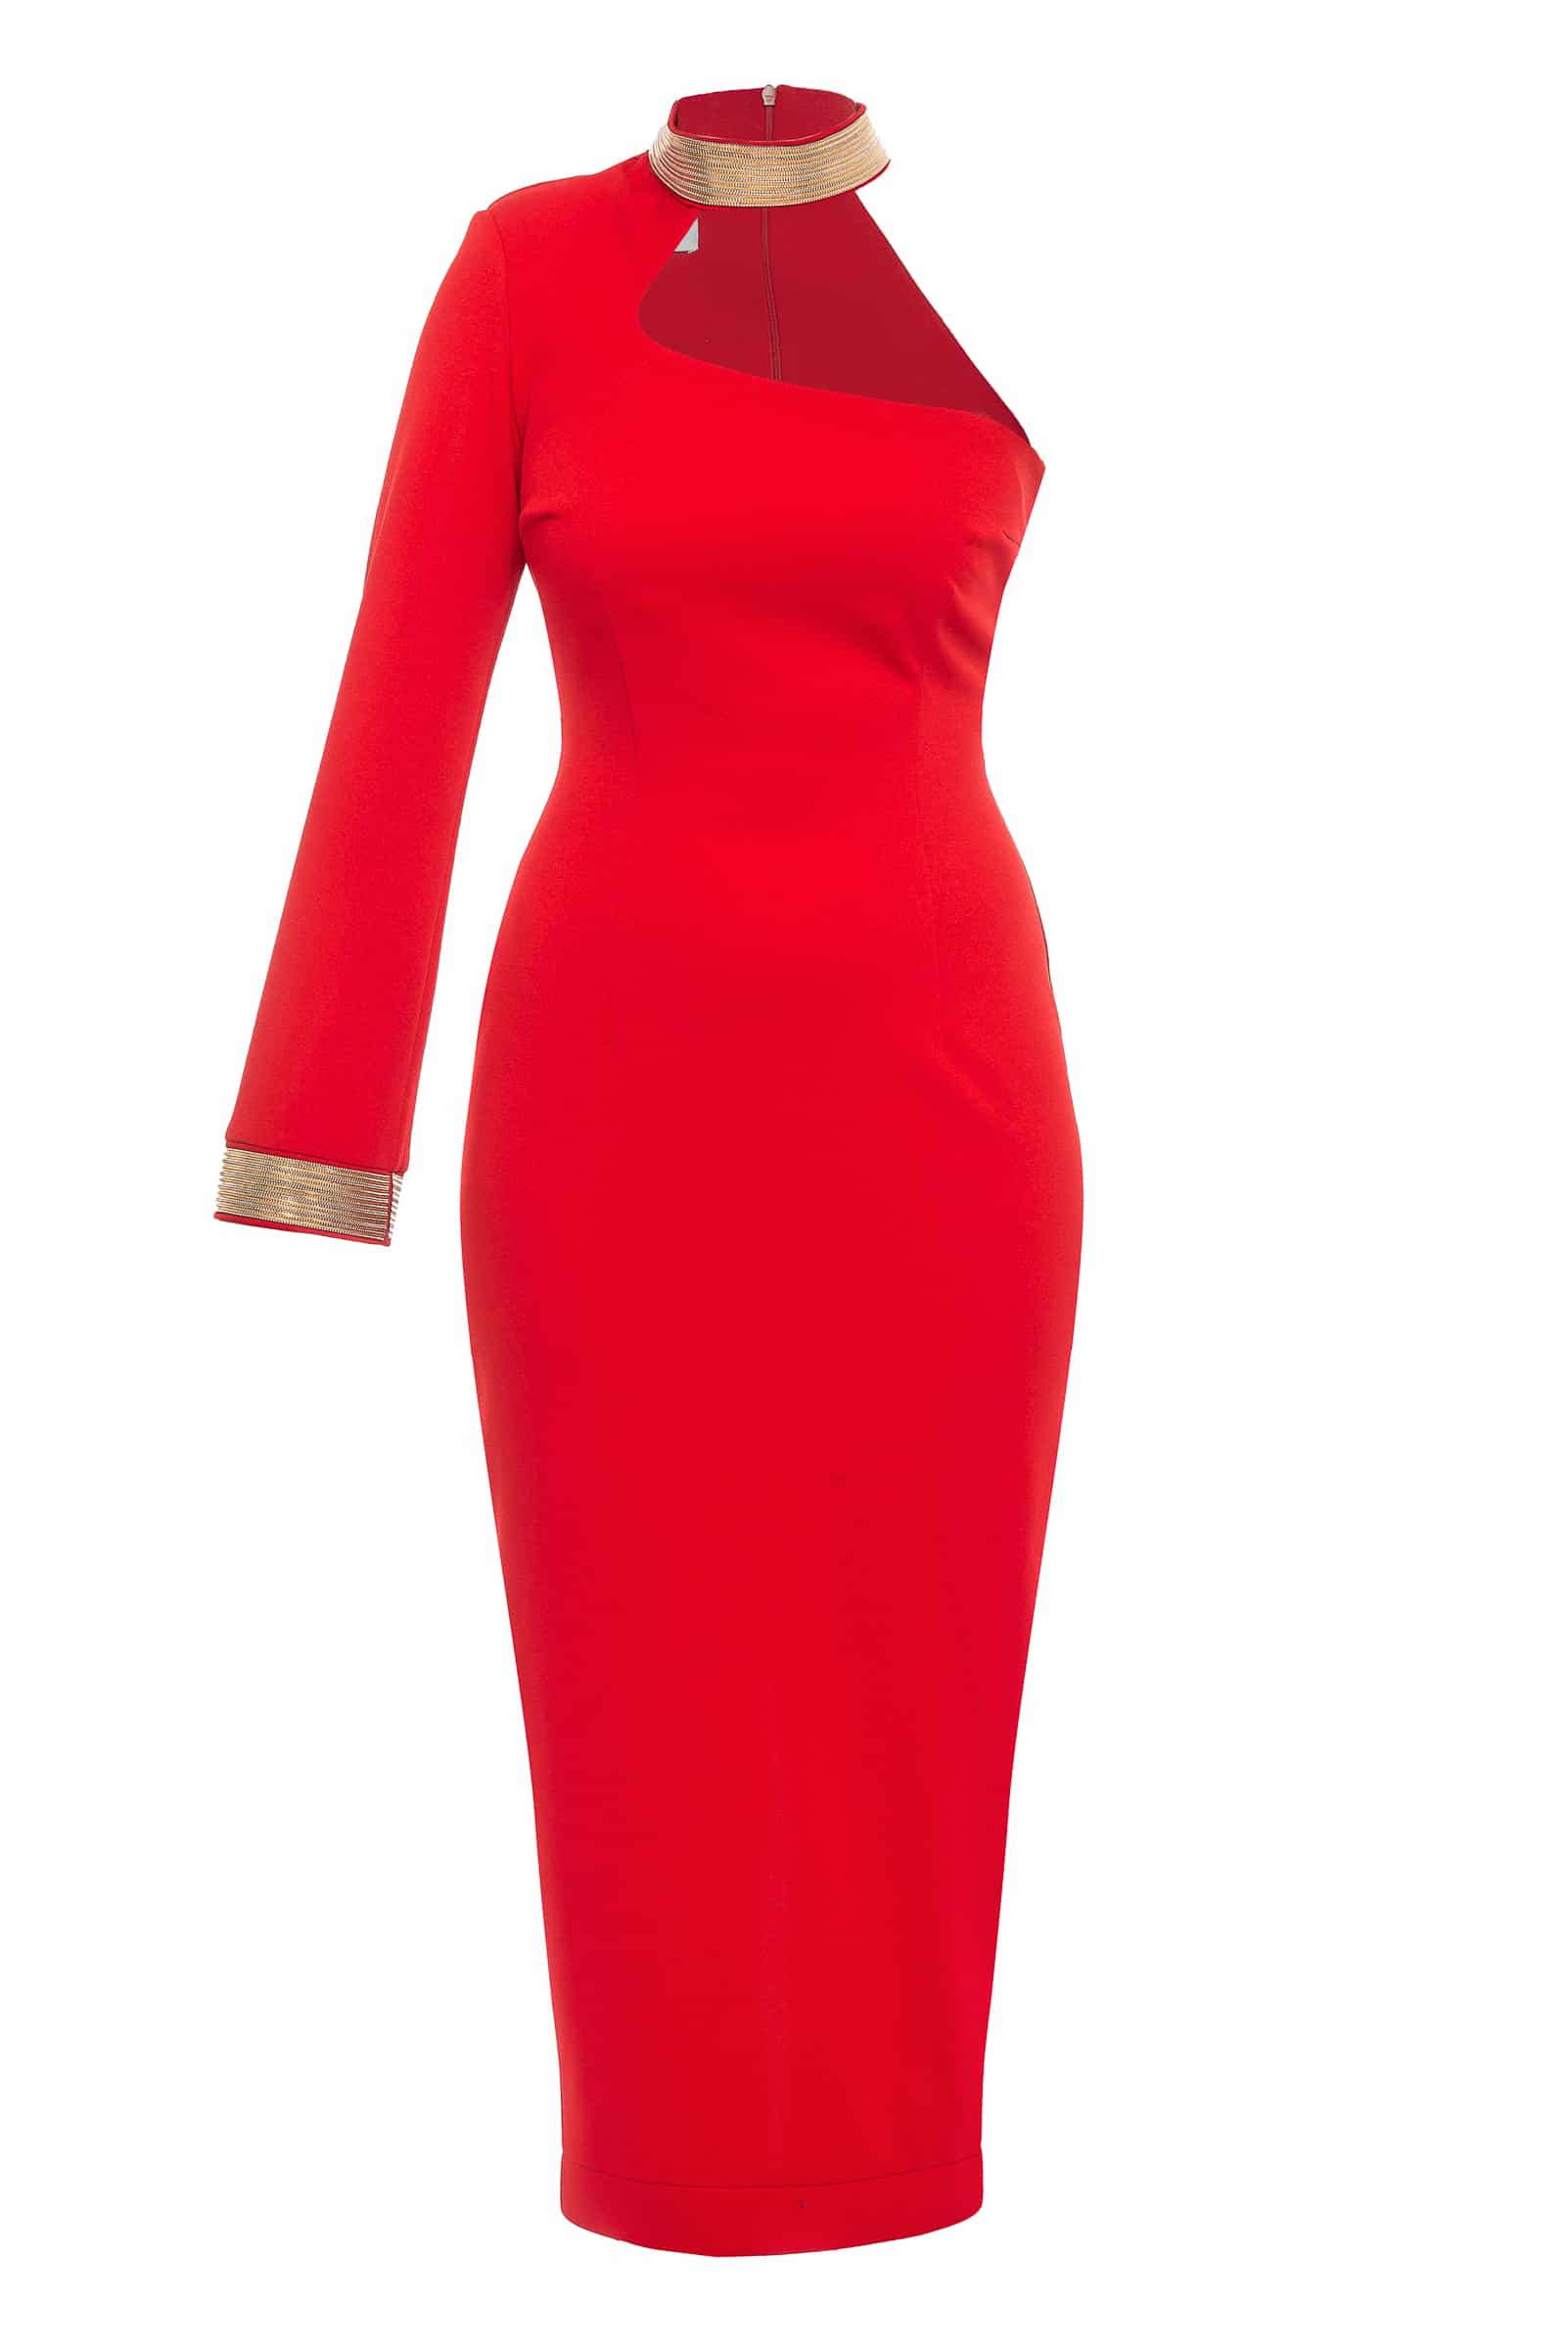 Red sheath dress with metallic trim